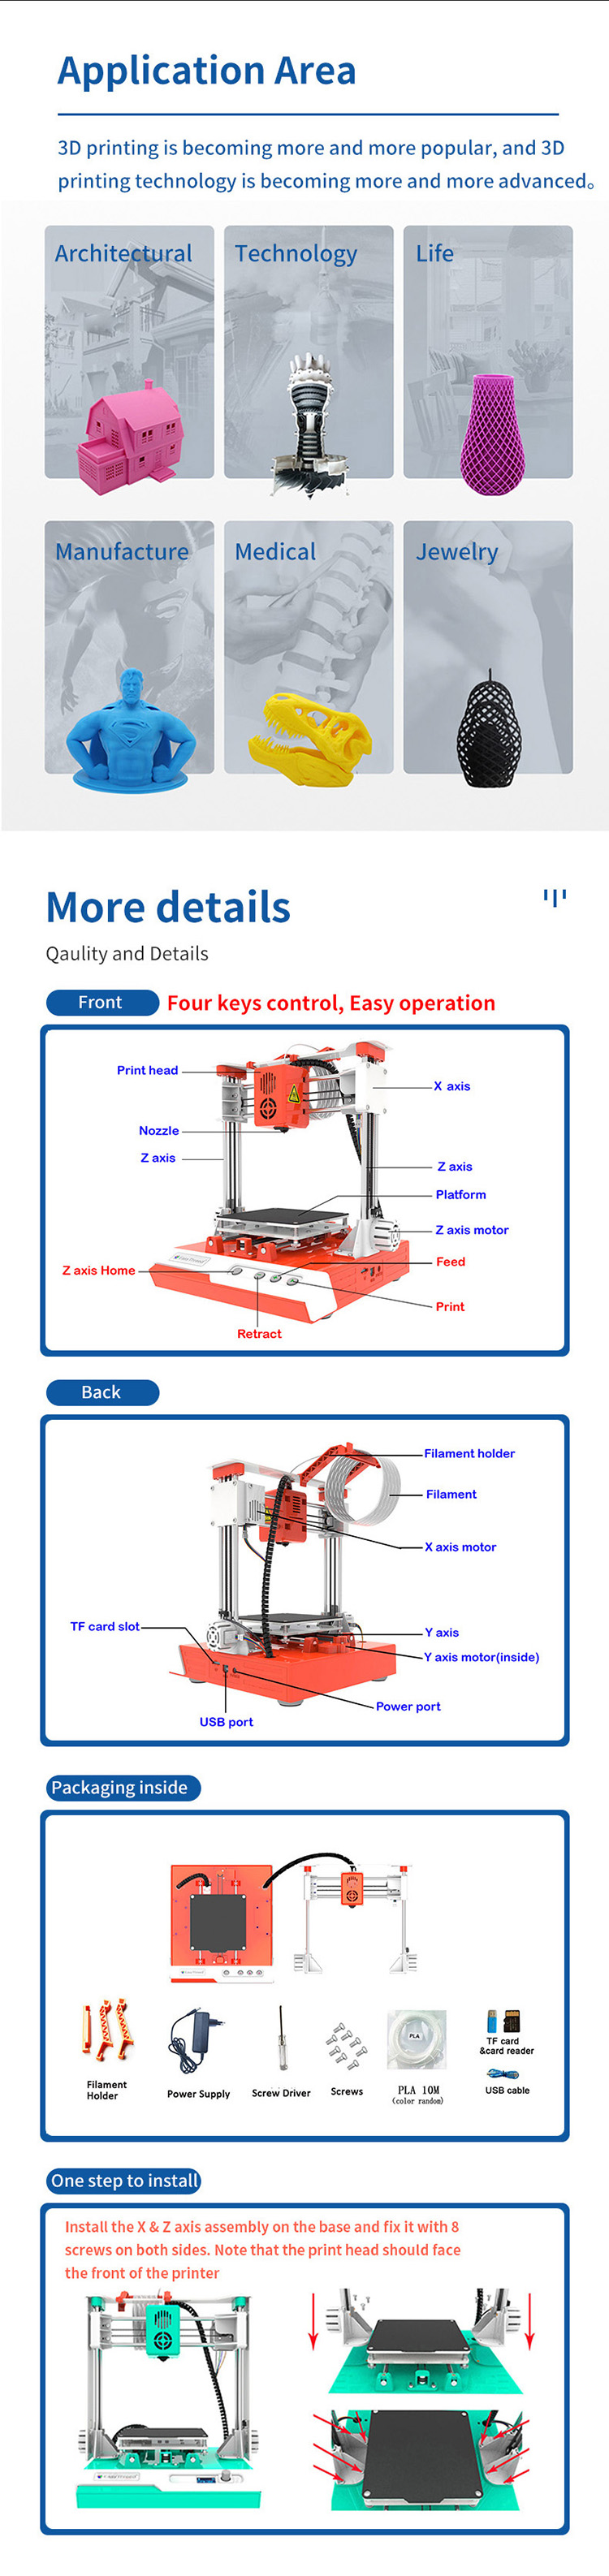 Easythreedreg-K1-Desktop-Mini-3D-Printer-Kit-100X100X100mm-Print-Size-Four-Keys-Control-for-Househol-1750973-5